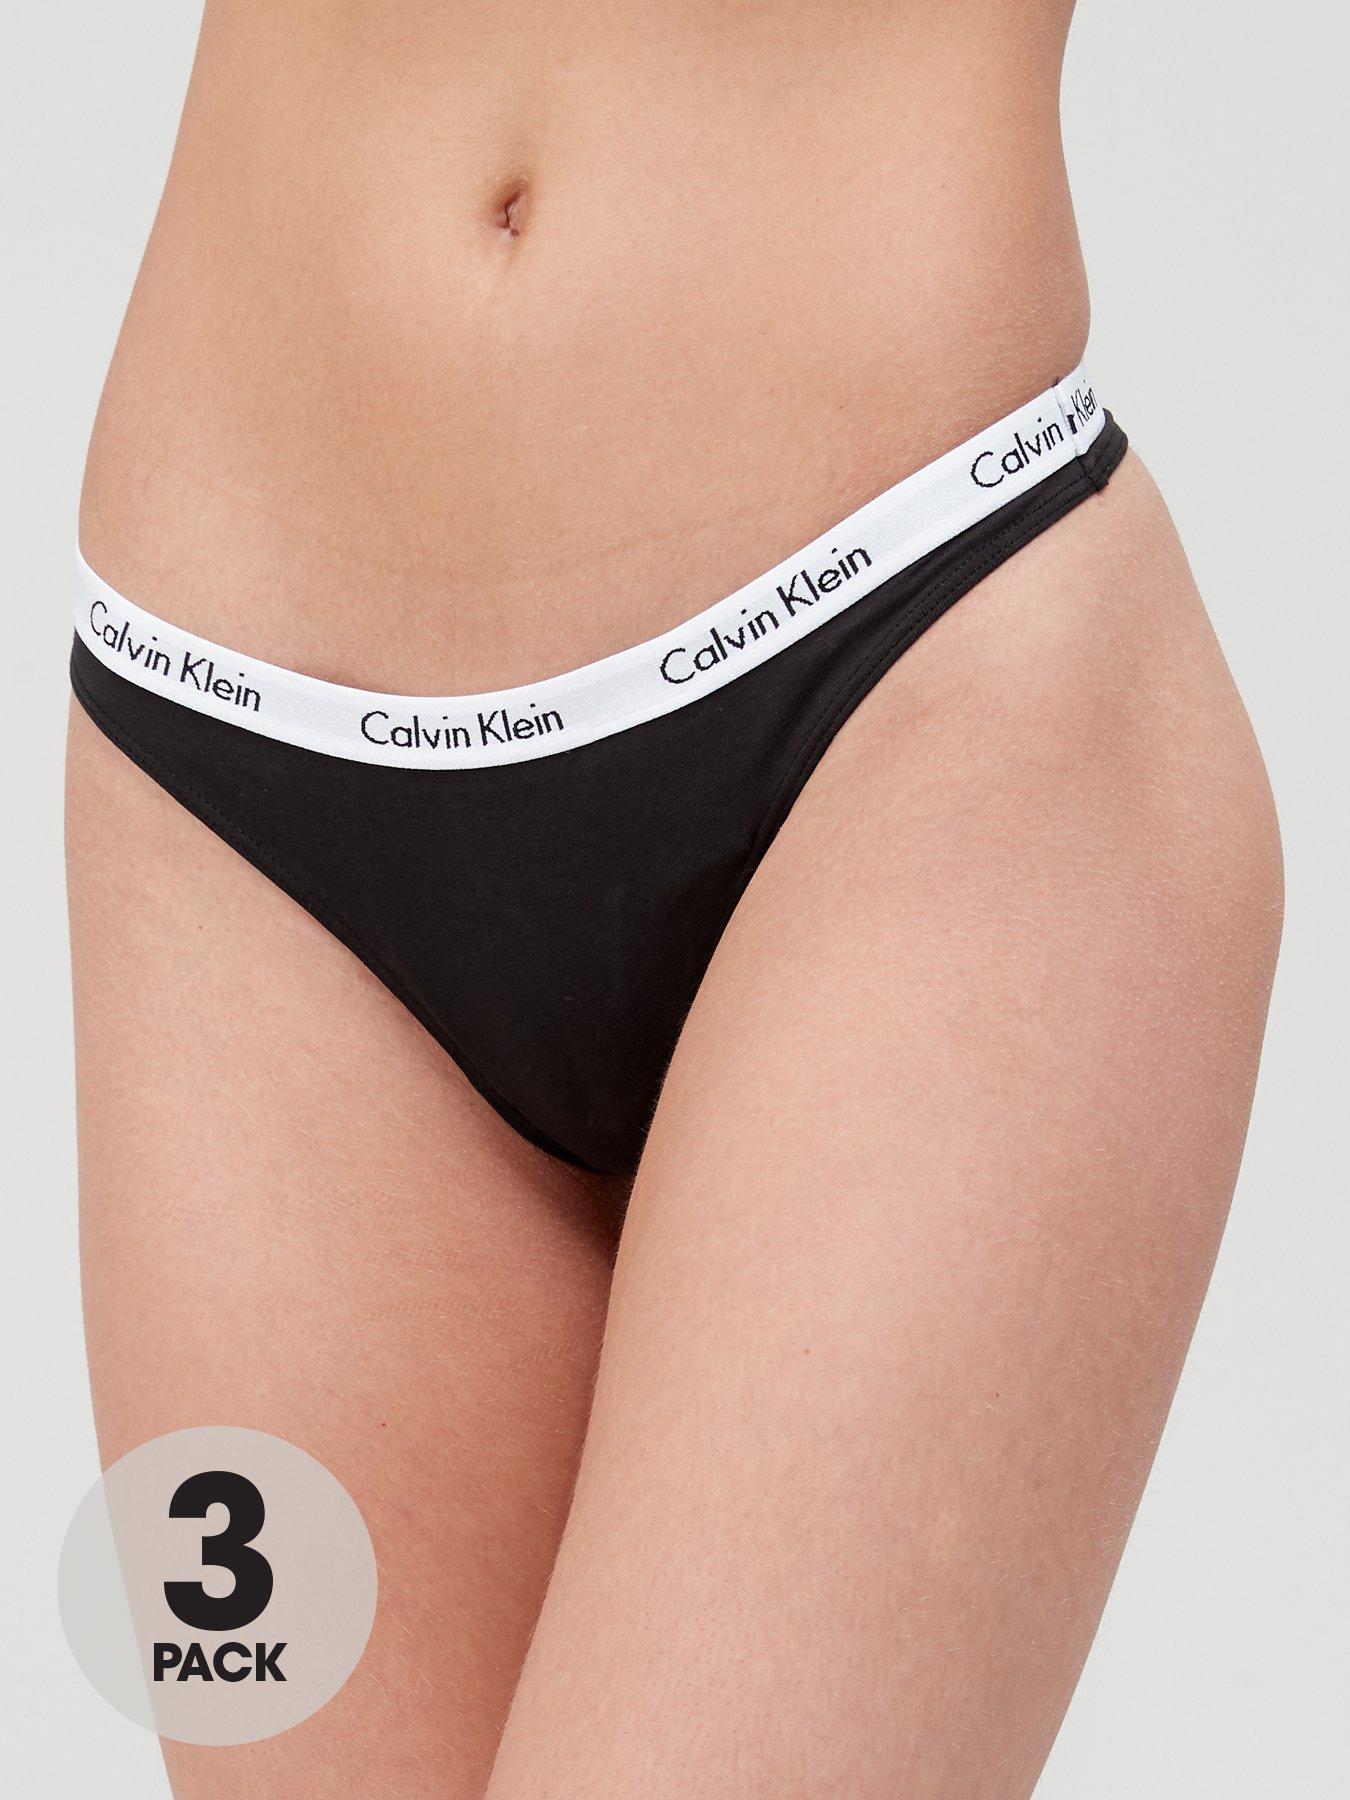 Calvin Klein Thong (3 Pack) - Black/White